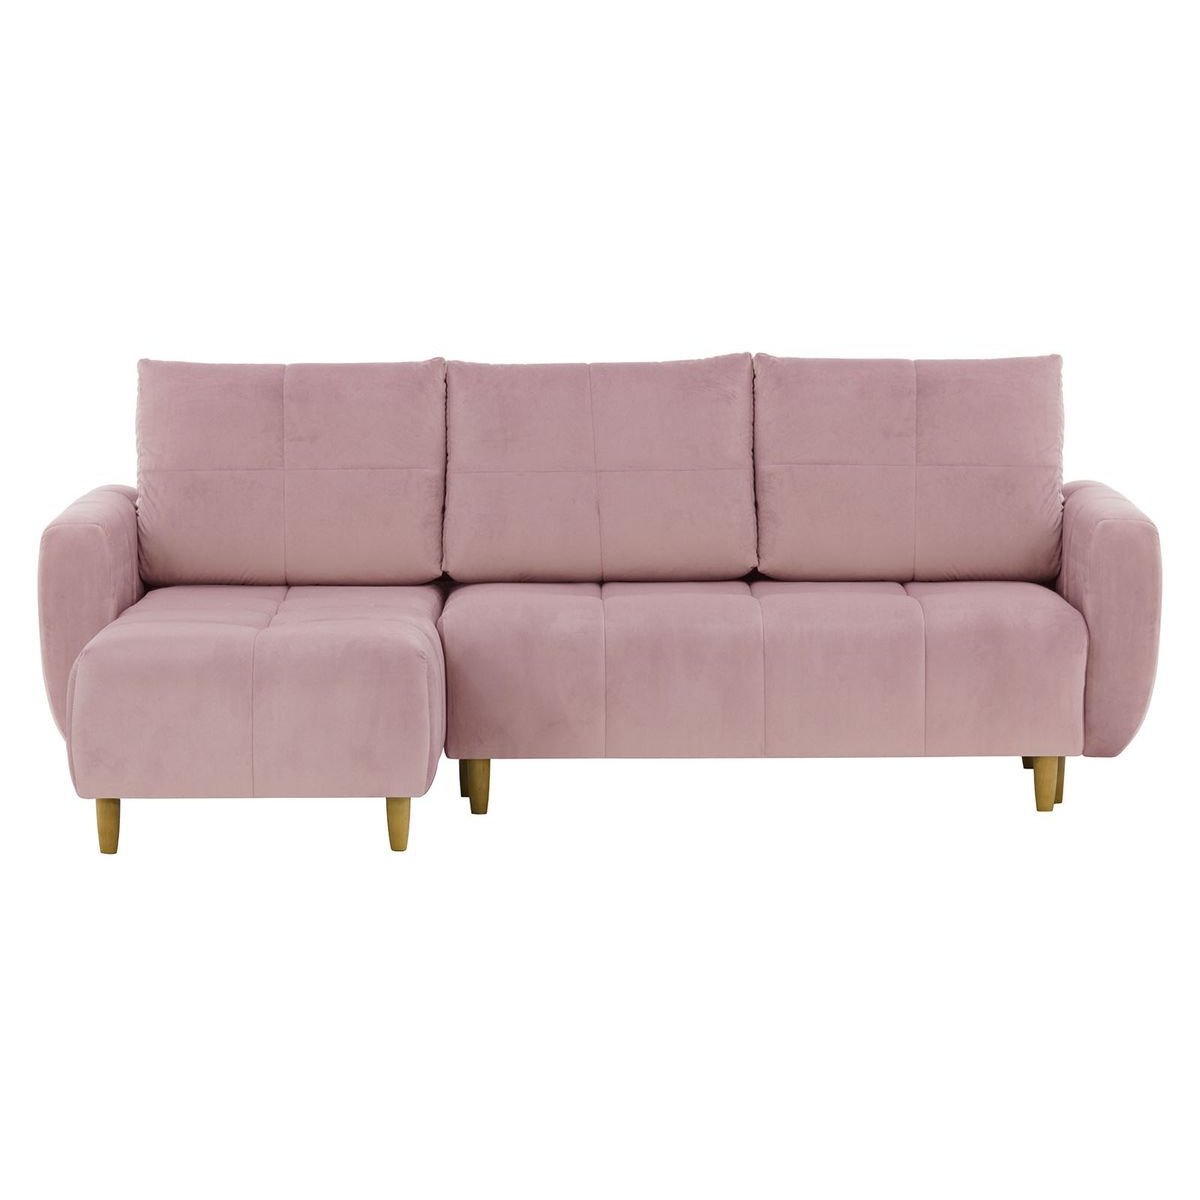 Globe Corner Sofa Bed, lilac - image 1